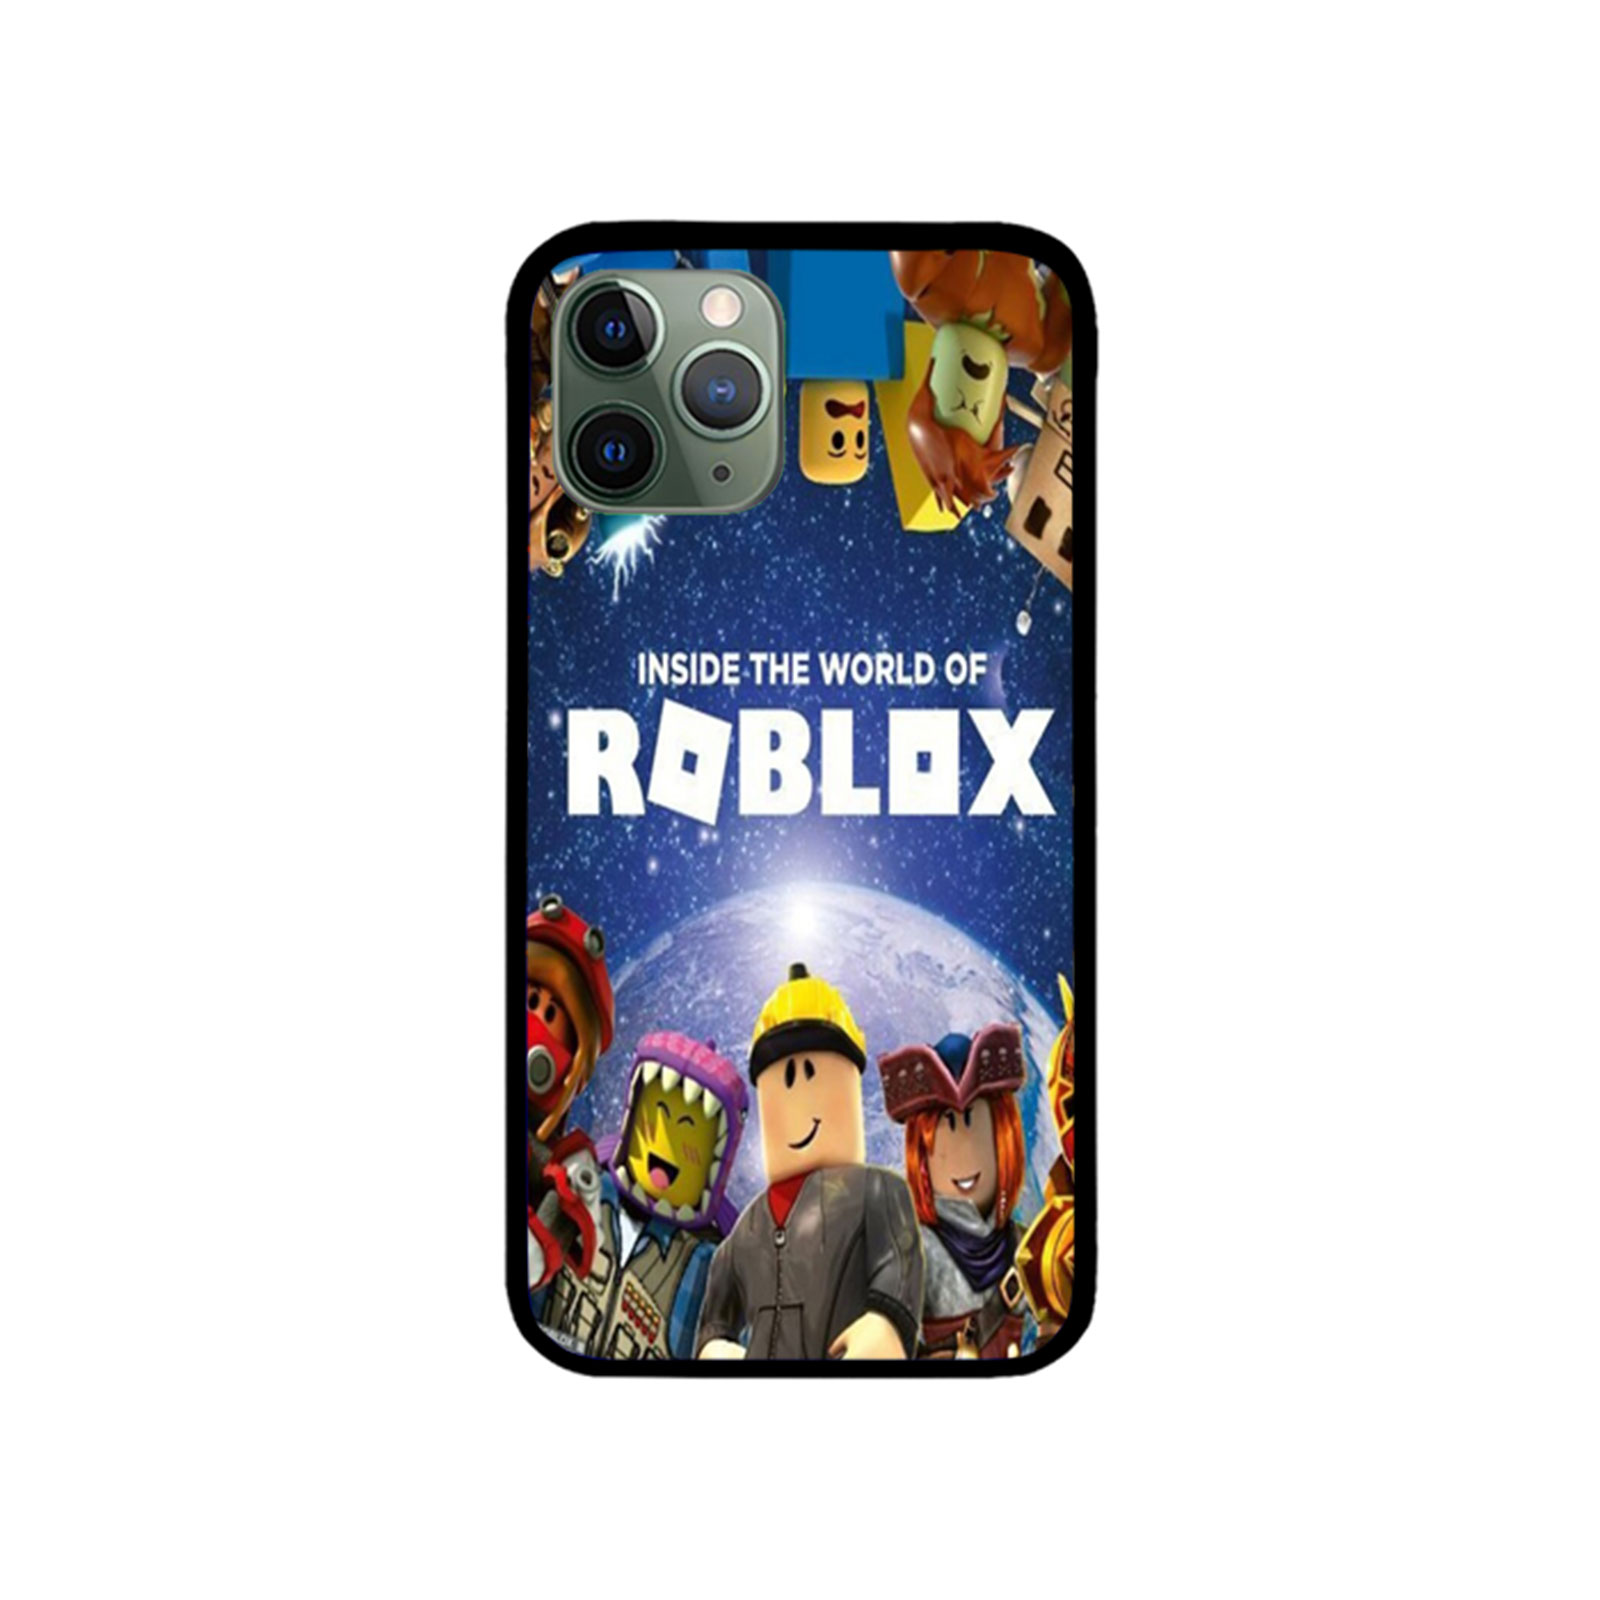 https://www.ferolos.com/wp-content/uploads/2020/04/Inside-the-world-of-Roblox-iPhone-Case.jpg